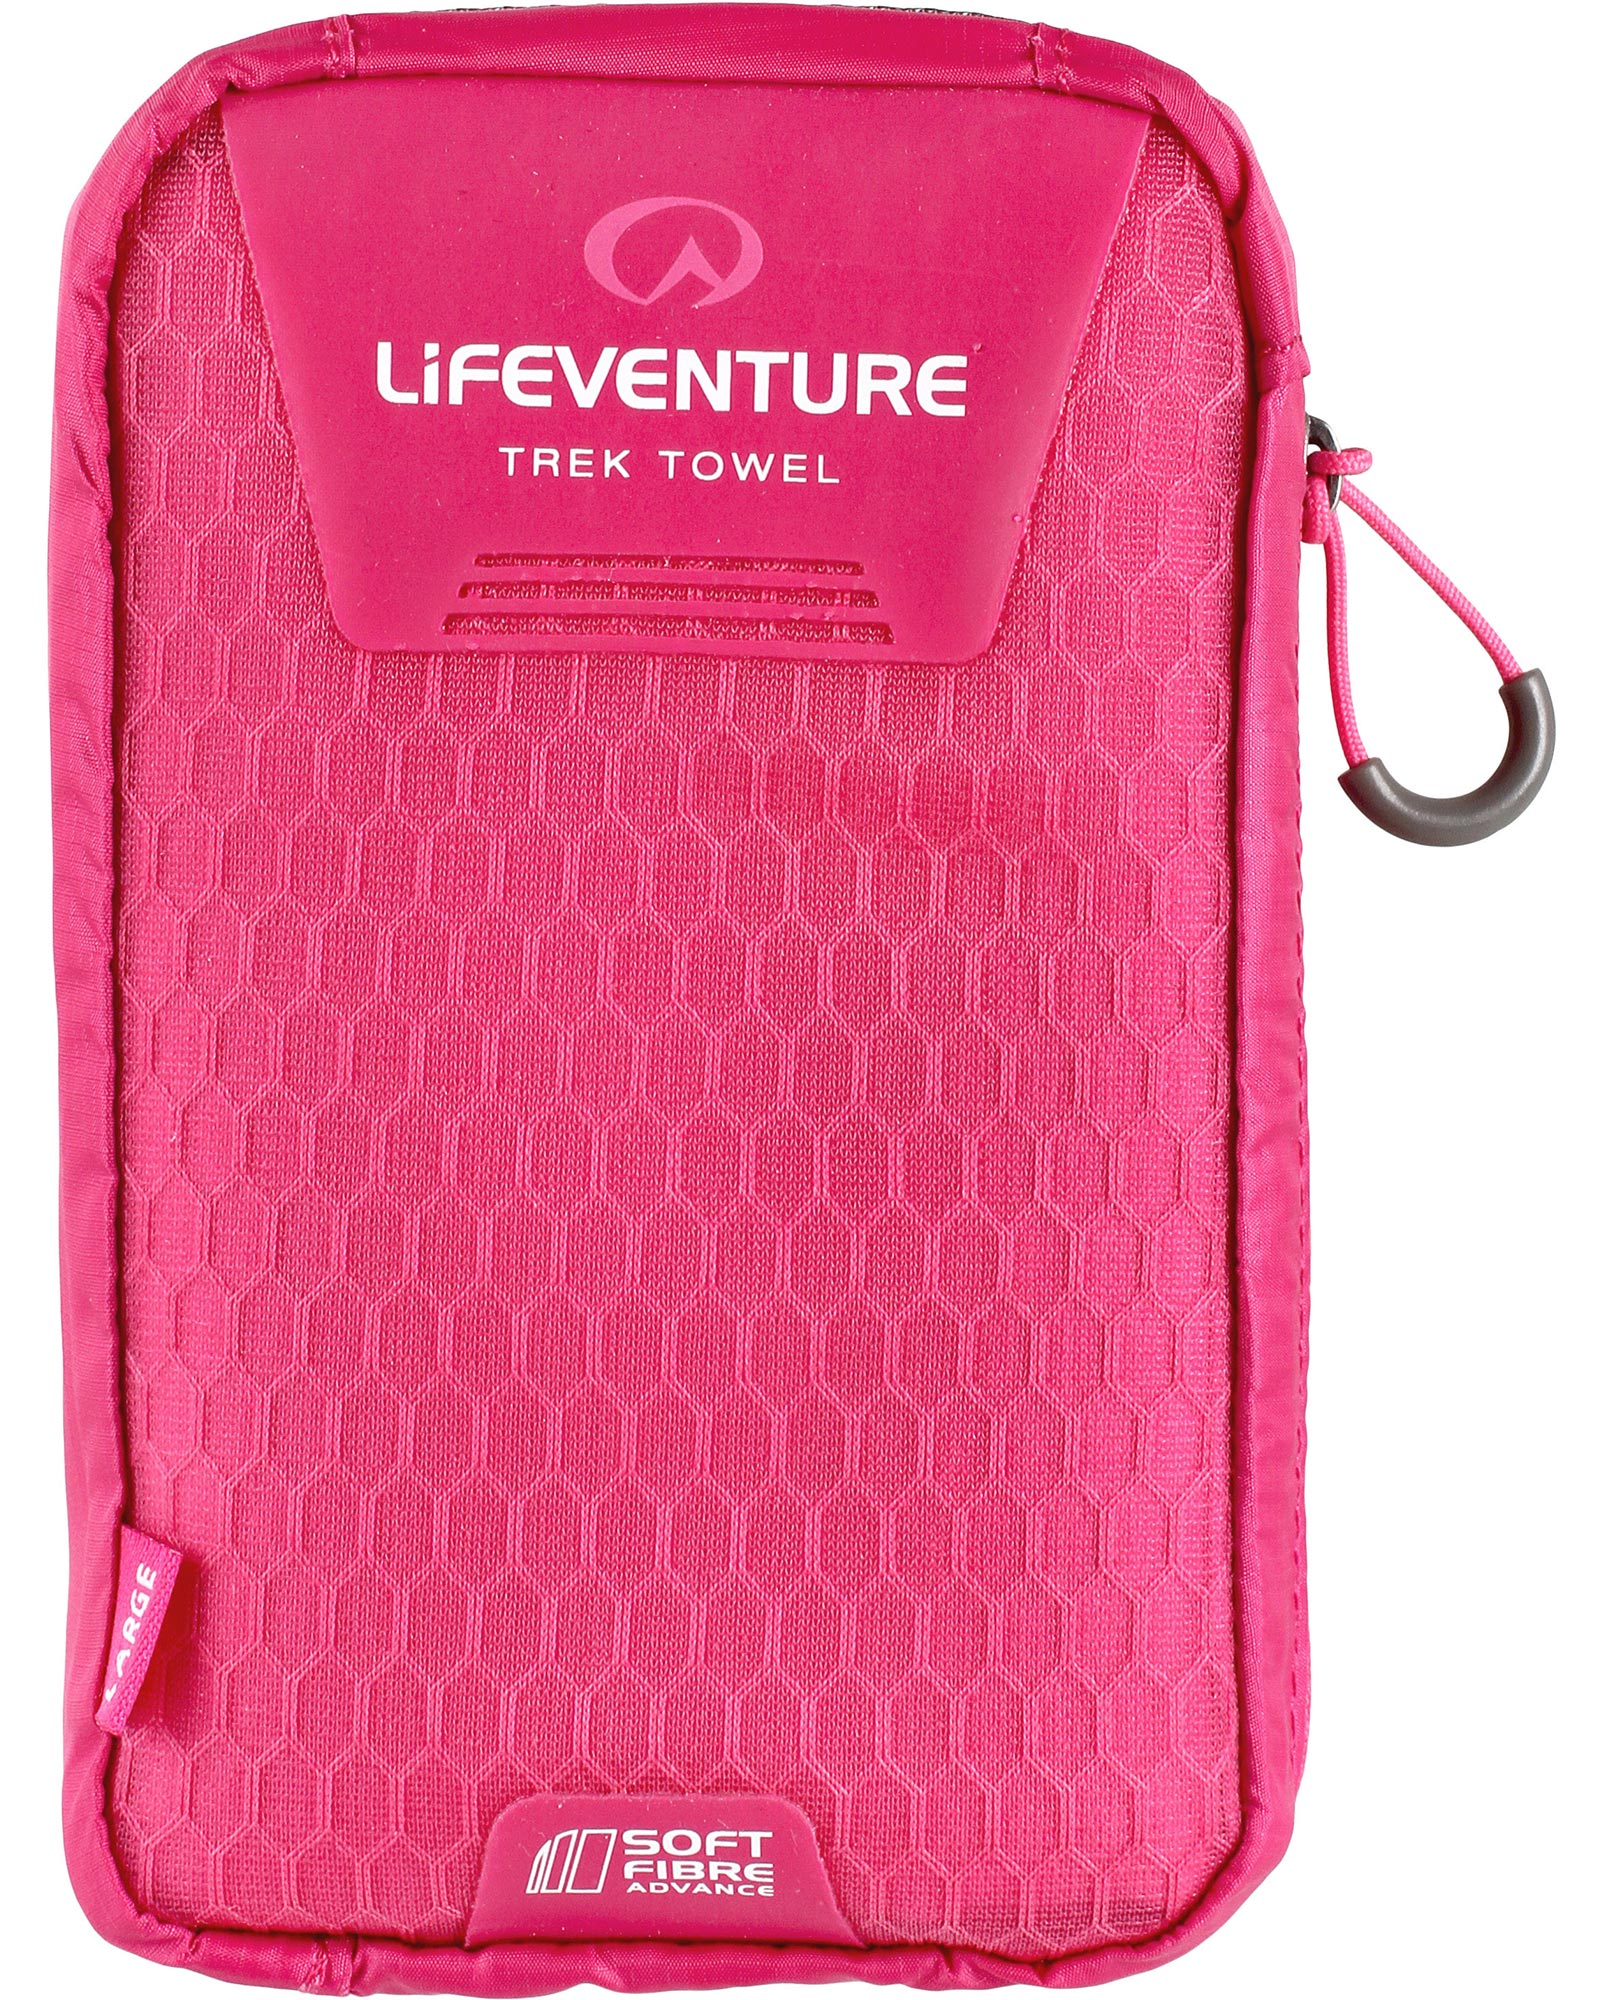 Product image of Lifeventure Soft Fibre Trek Towel - Large